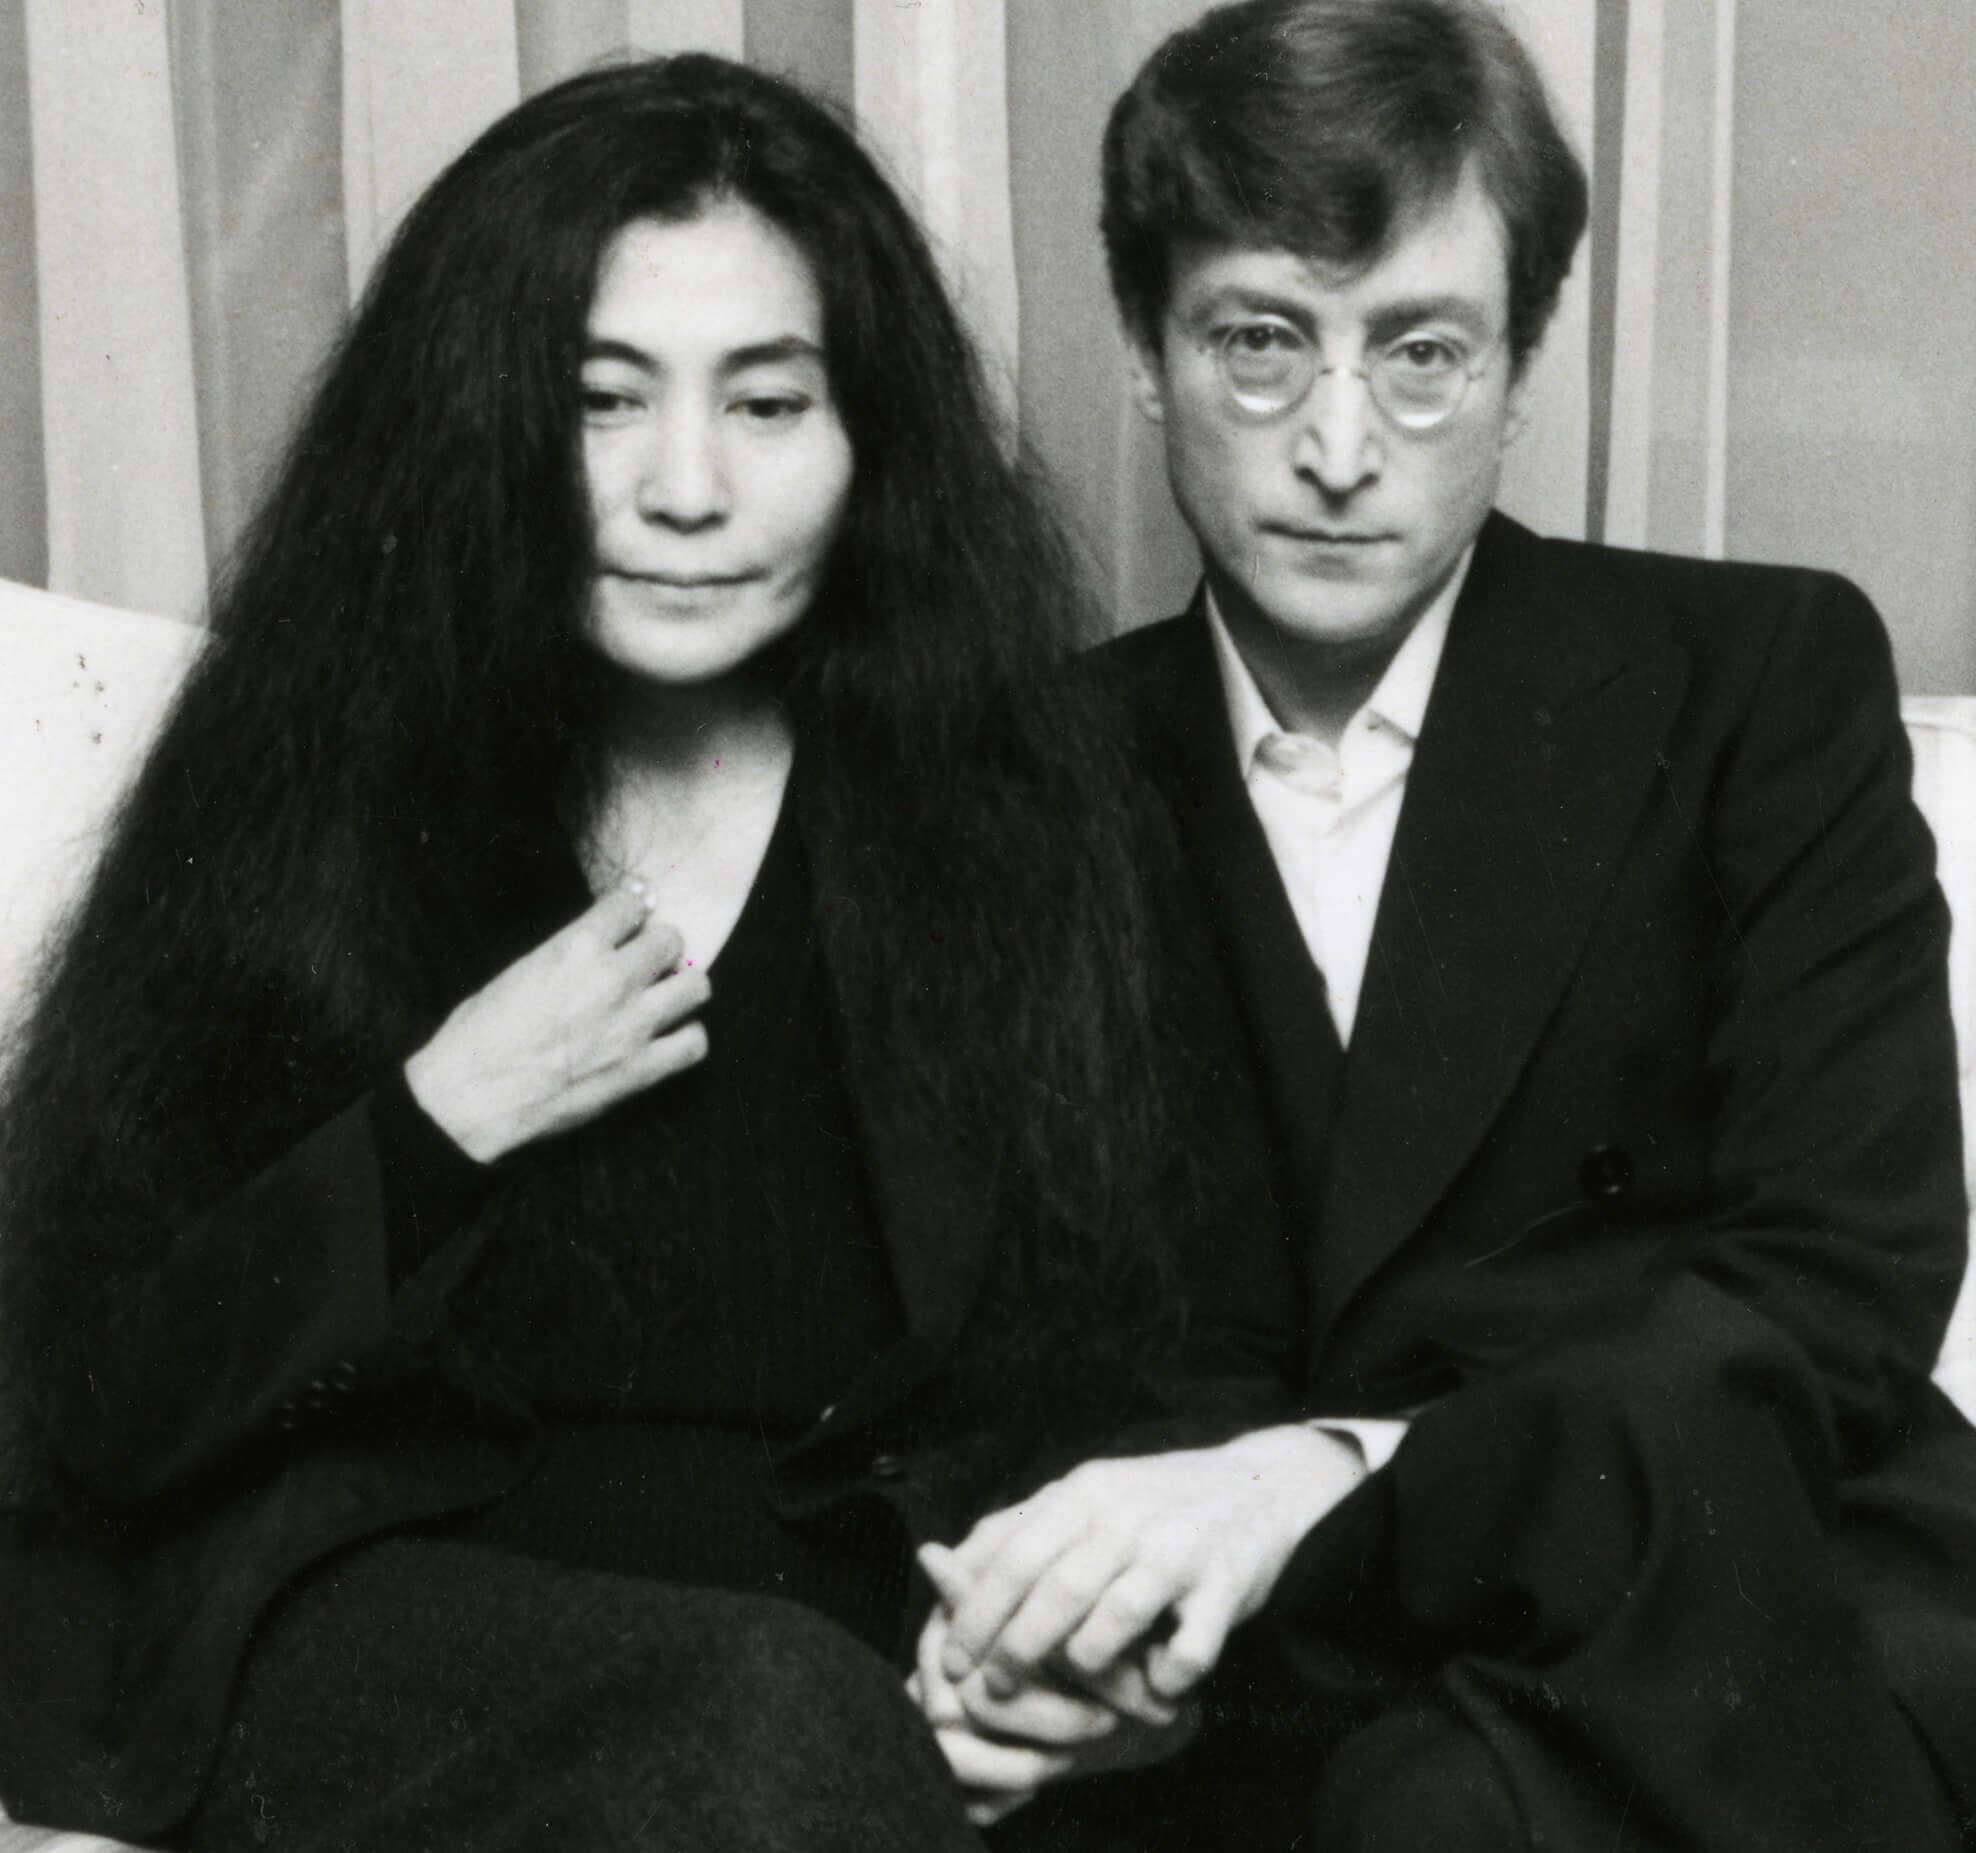 Yoko Ono and John Lennon holding hands